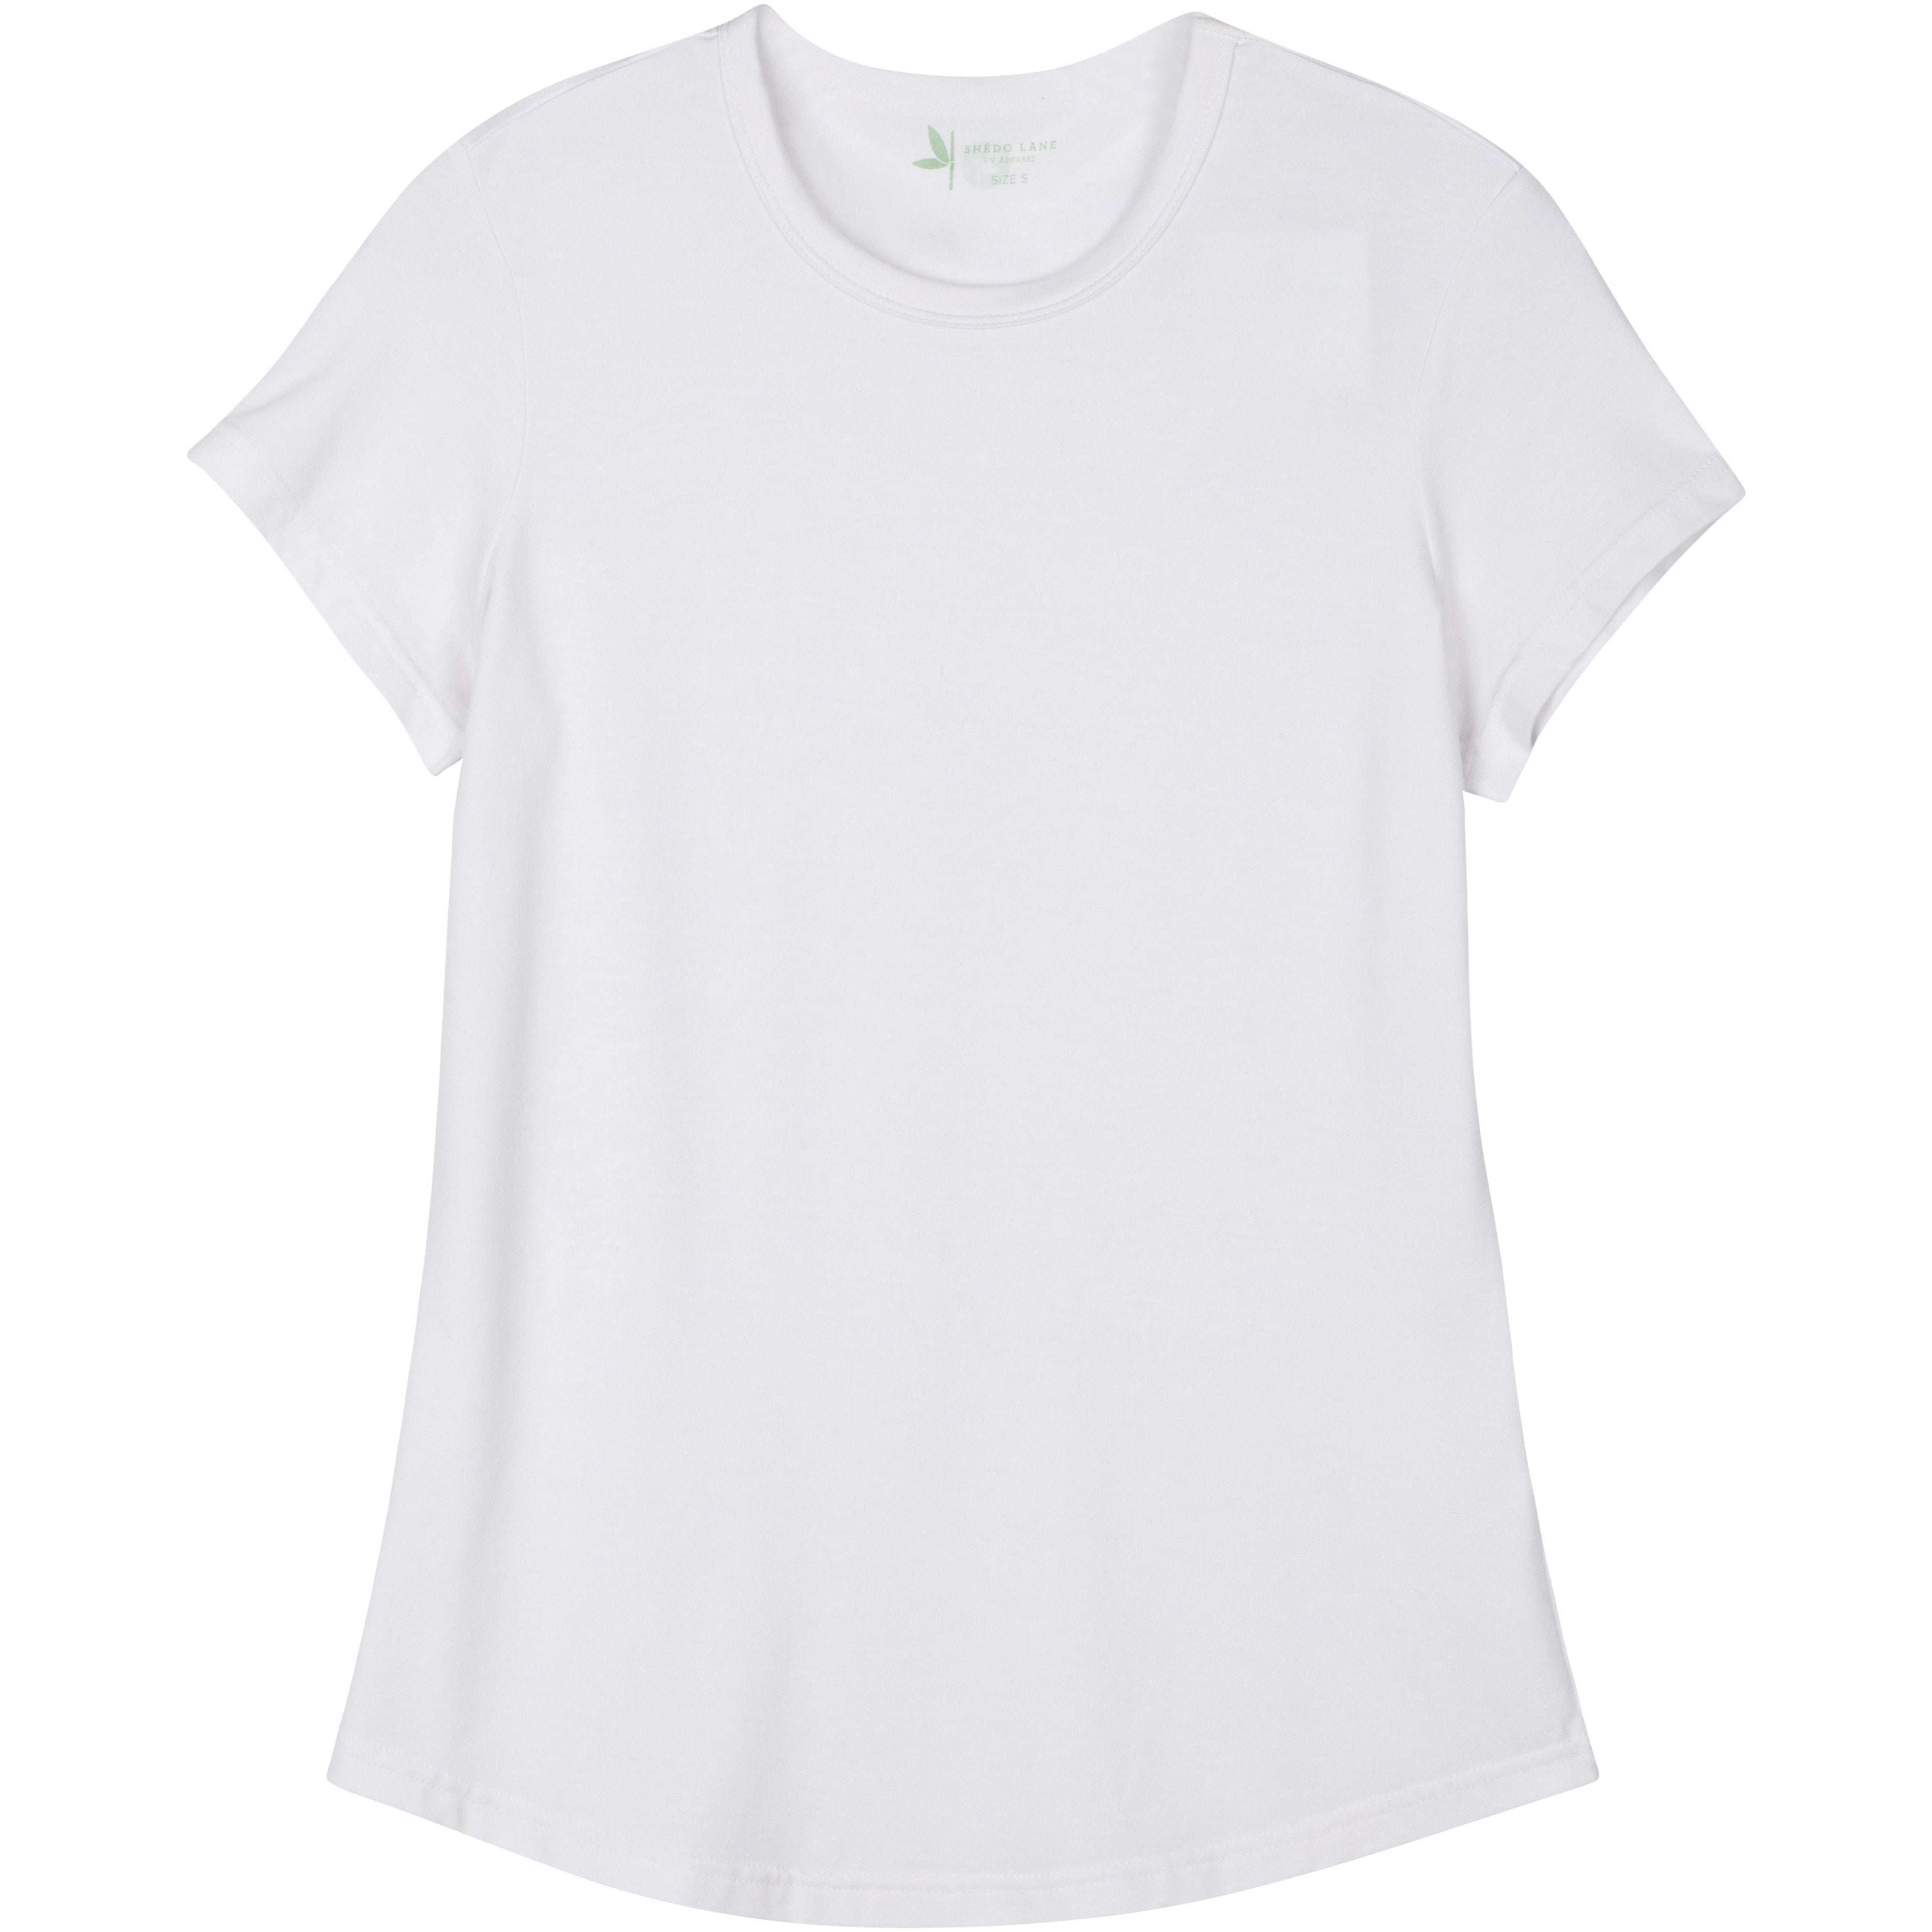 Women's Short Sleeve Fitted T-Shirt - UPF 50+ Protection - Shēdo Lane